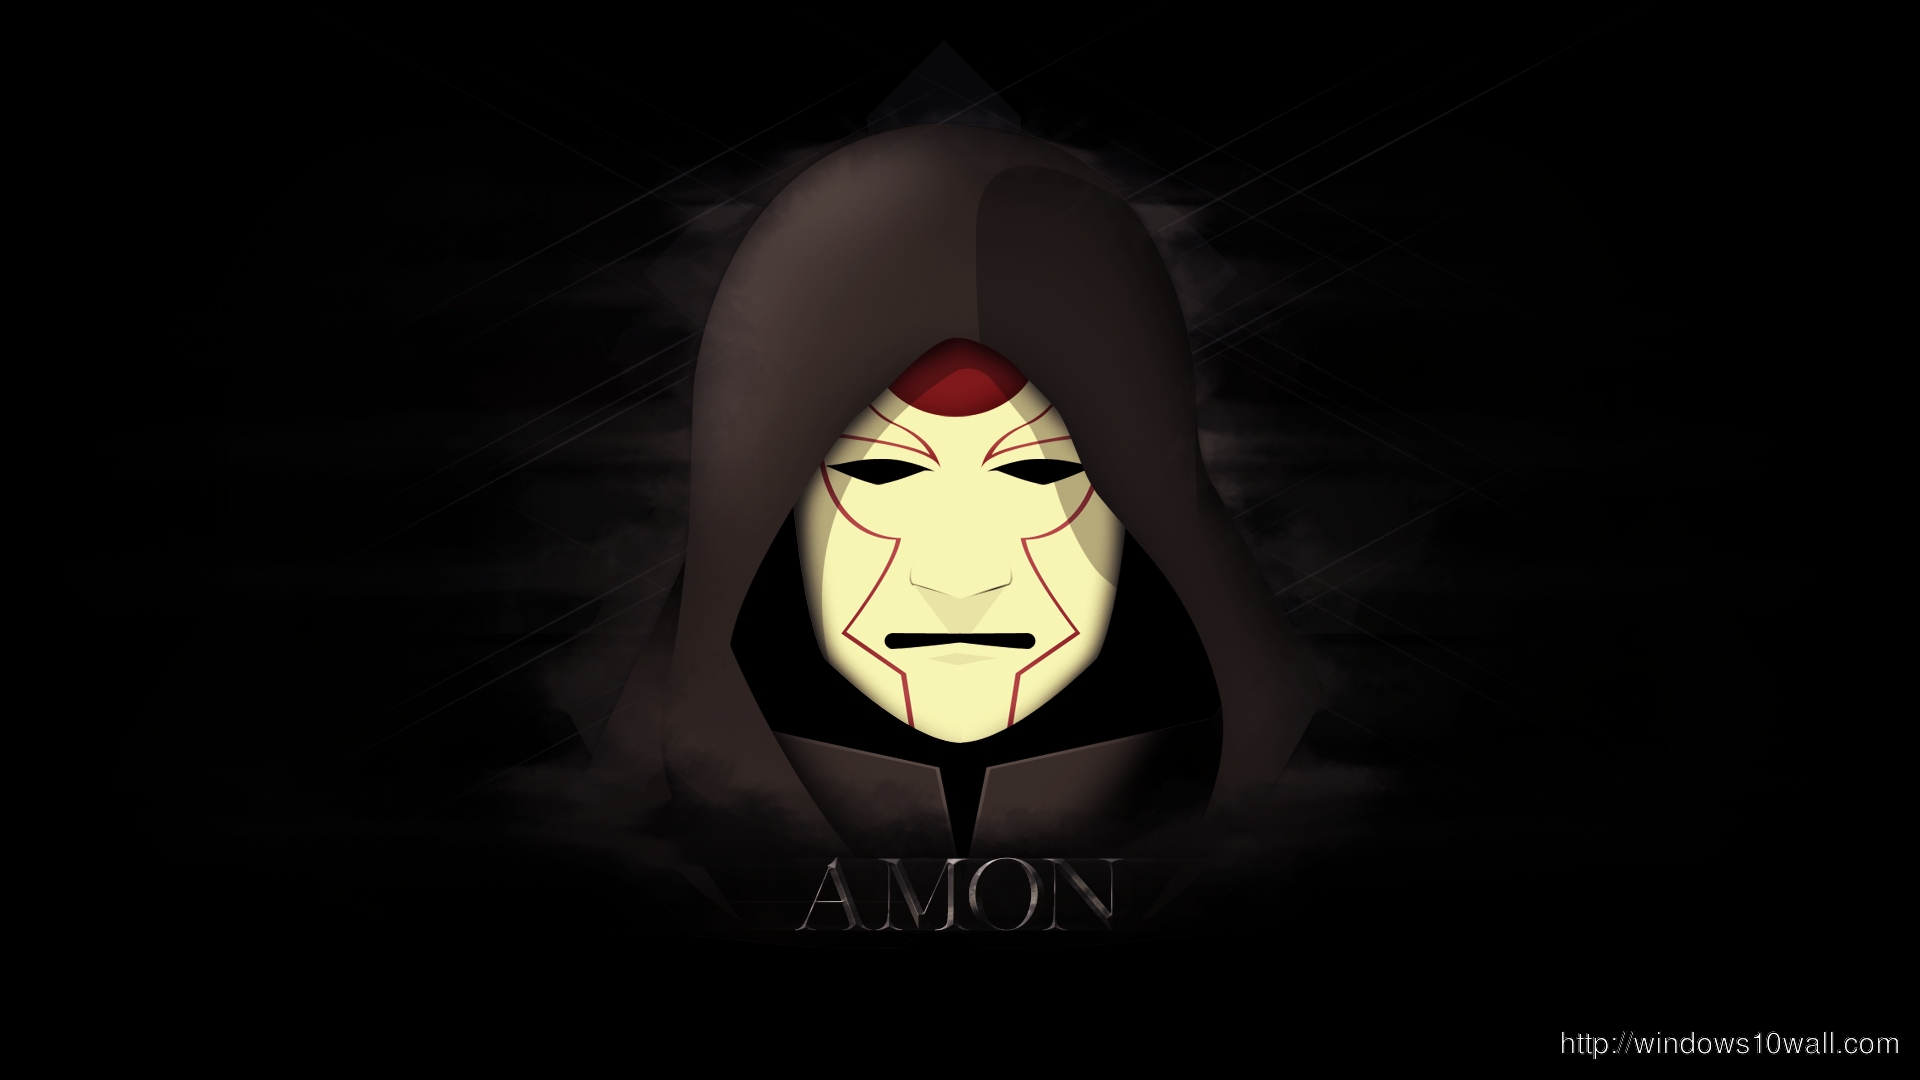 Amon Avatar The Lagend Of Korra - windows 10 Wallpapers